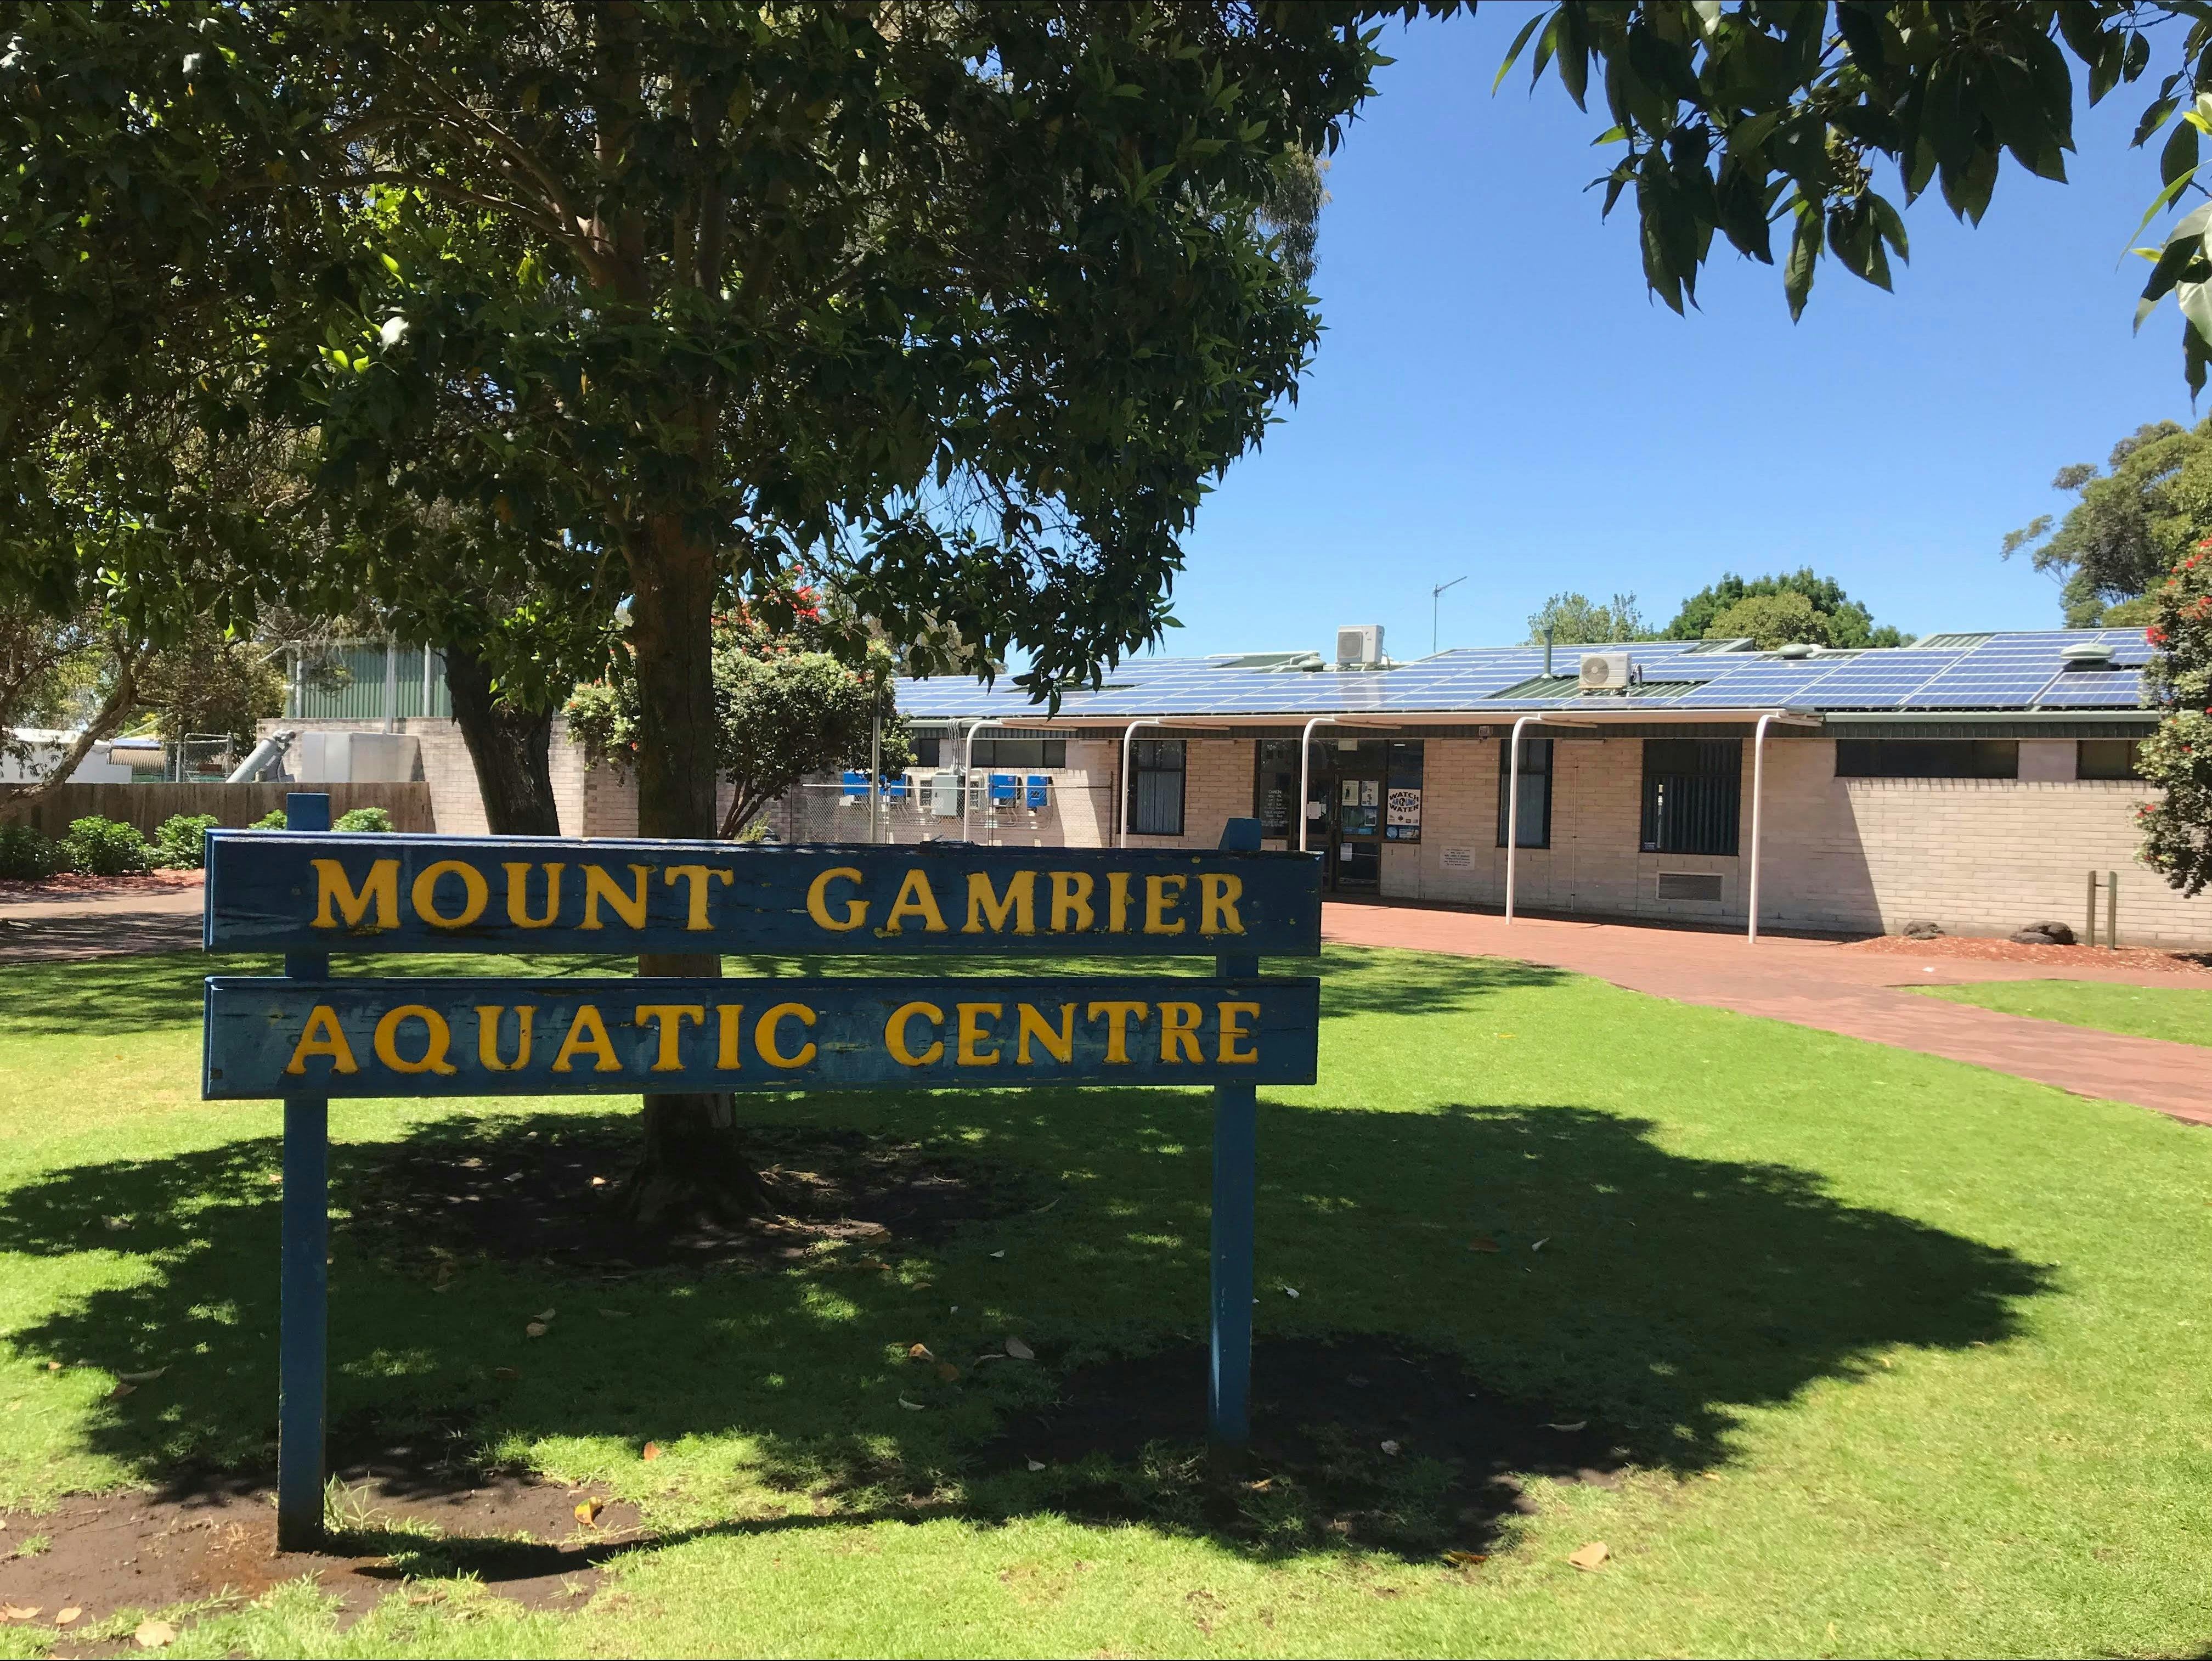 Mount Gambier Aquatic Centre